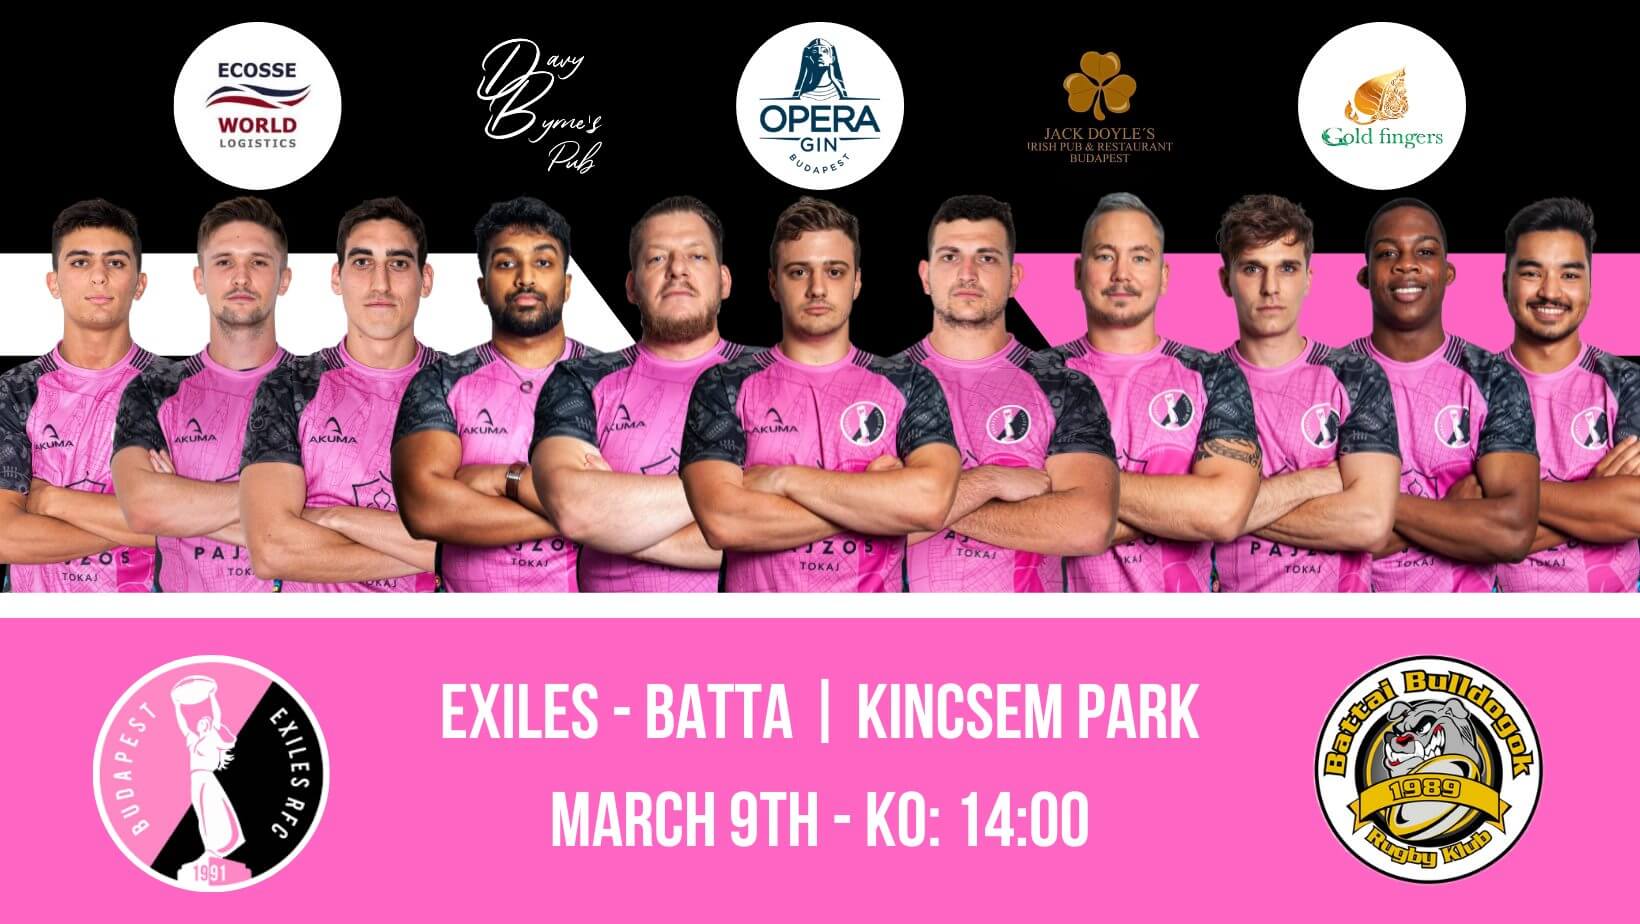 Rugby: Exiles vs Batta, Kincsem Park Budapest, 9 March